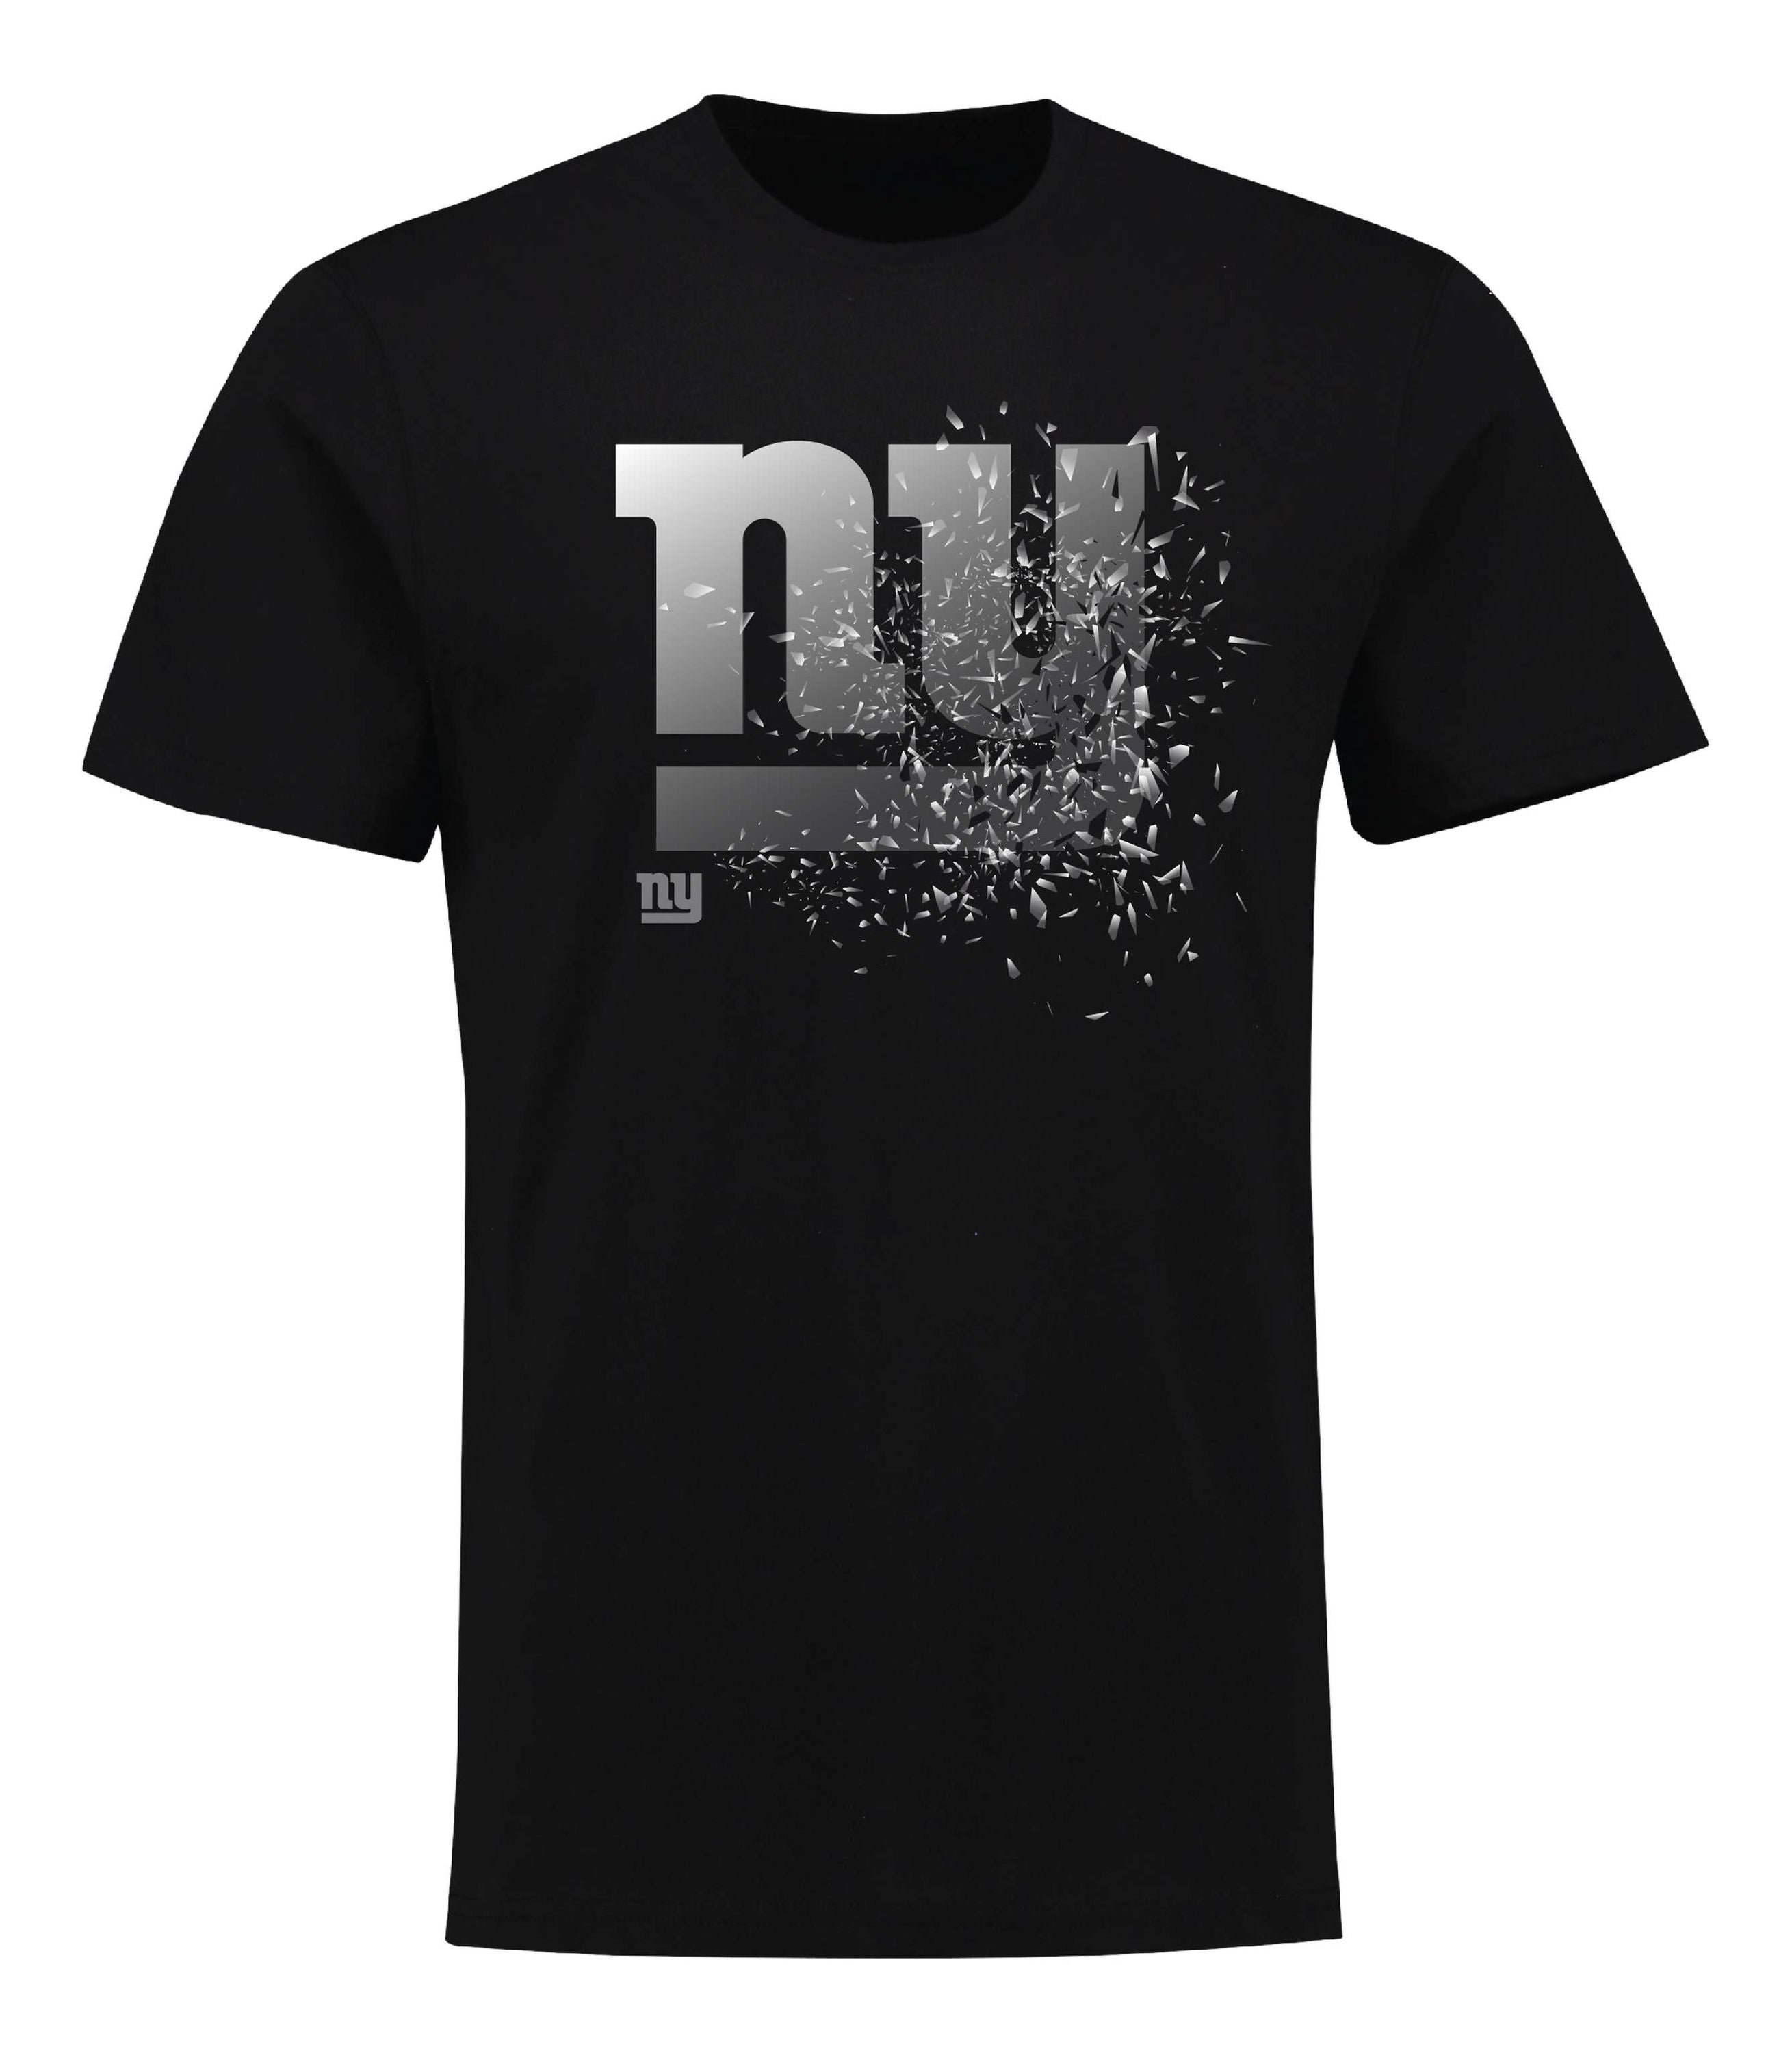 Fanatics - NFL New York Giants Shatter Graphic T-Shirt - Schwarz